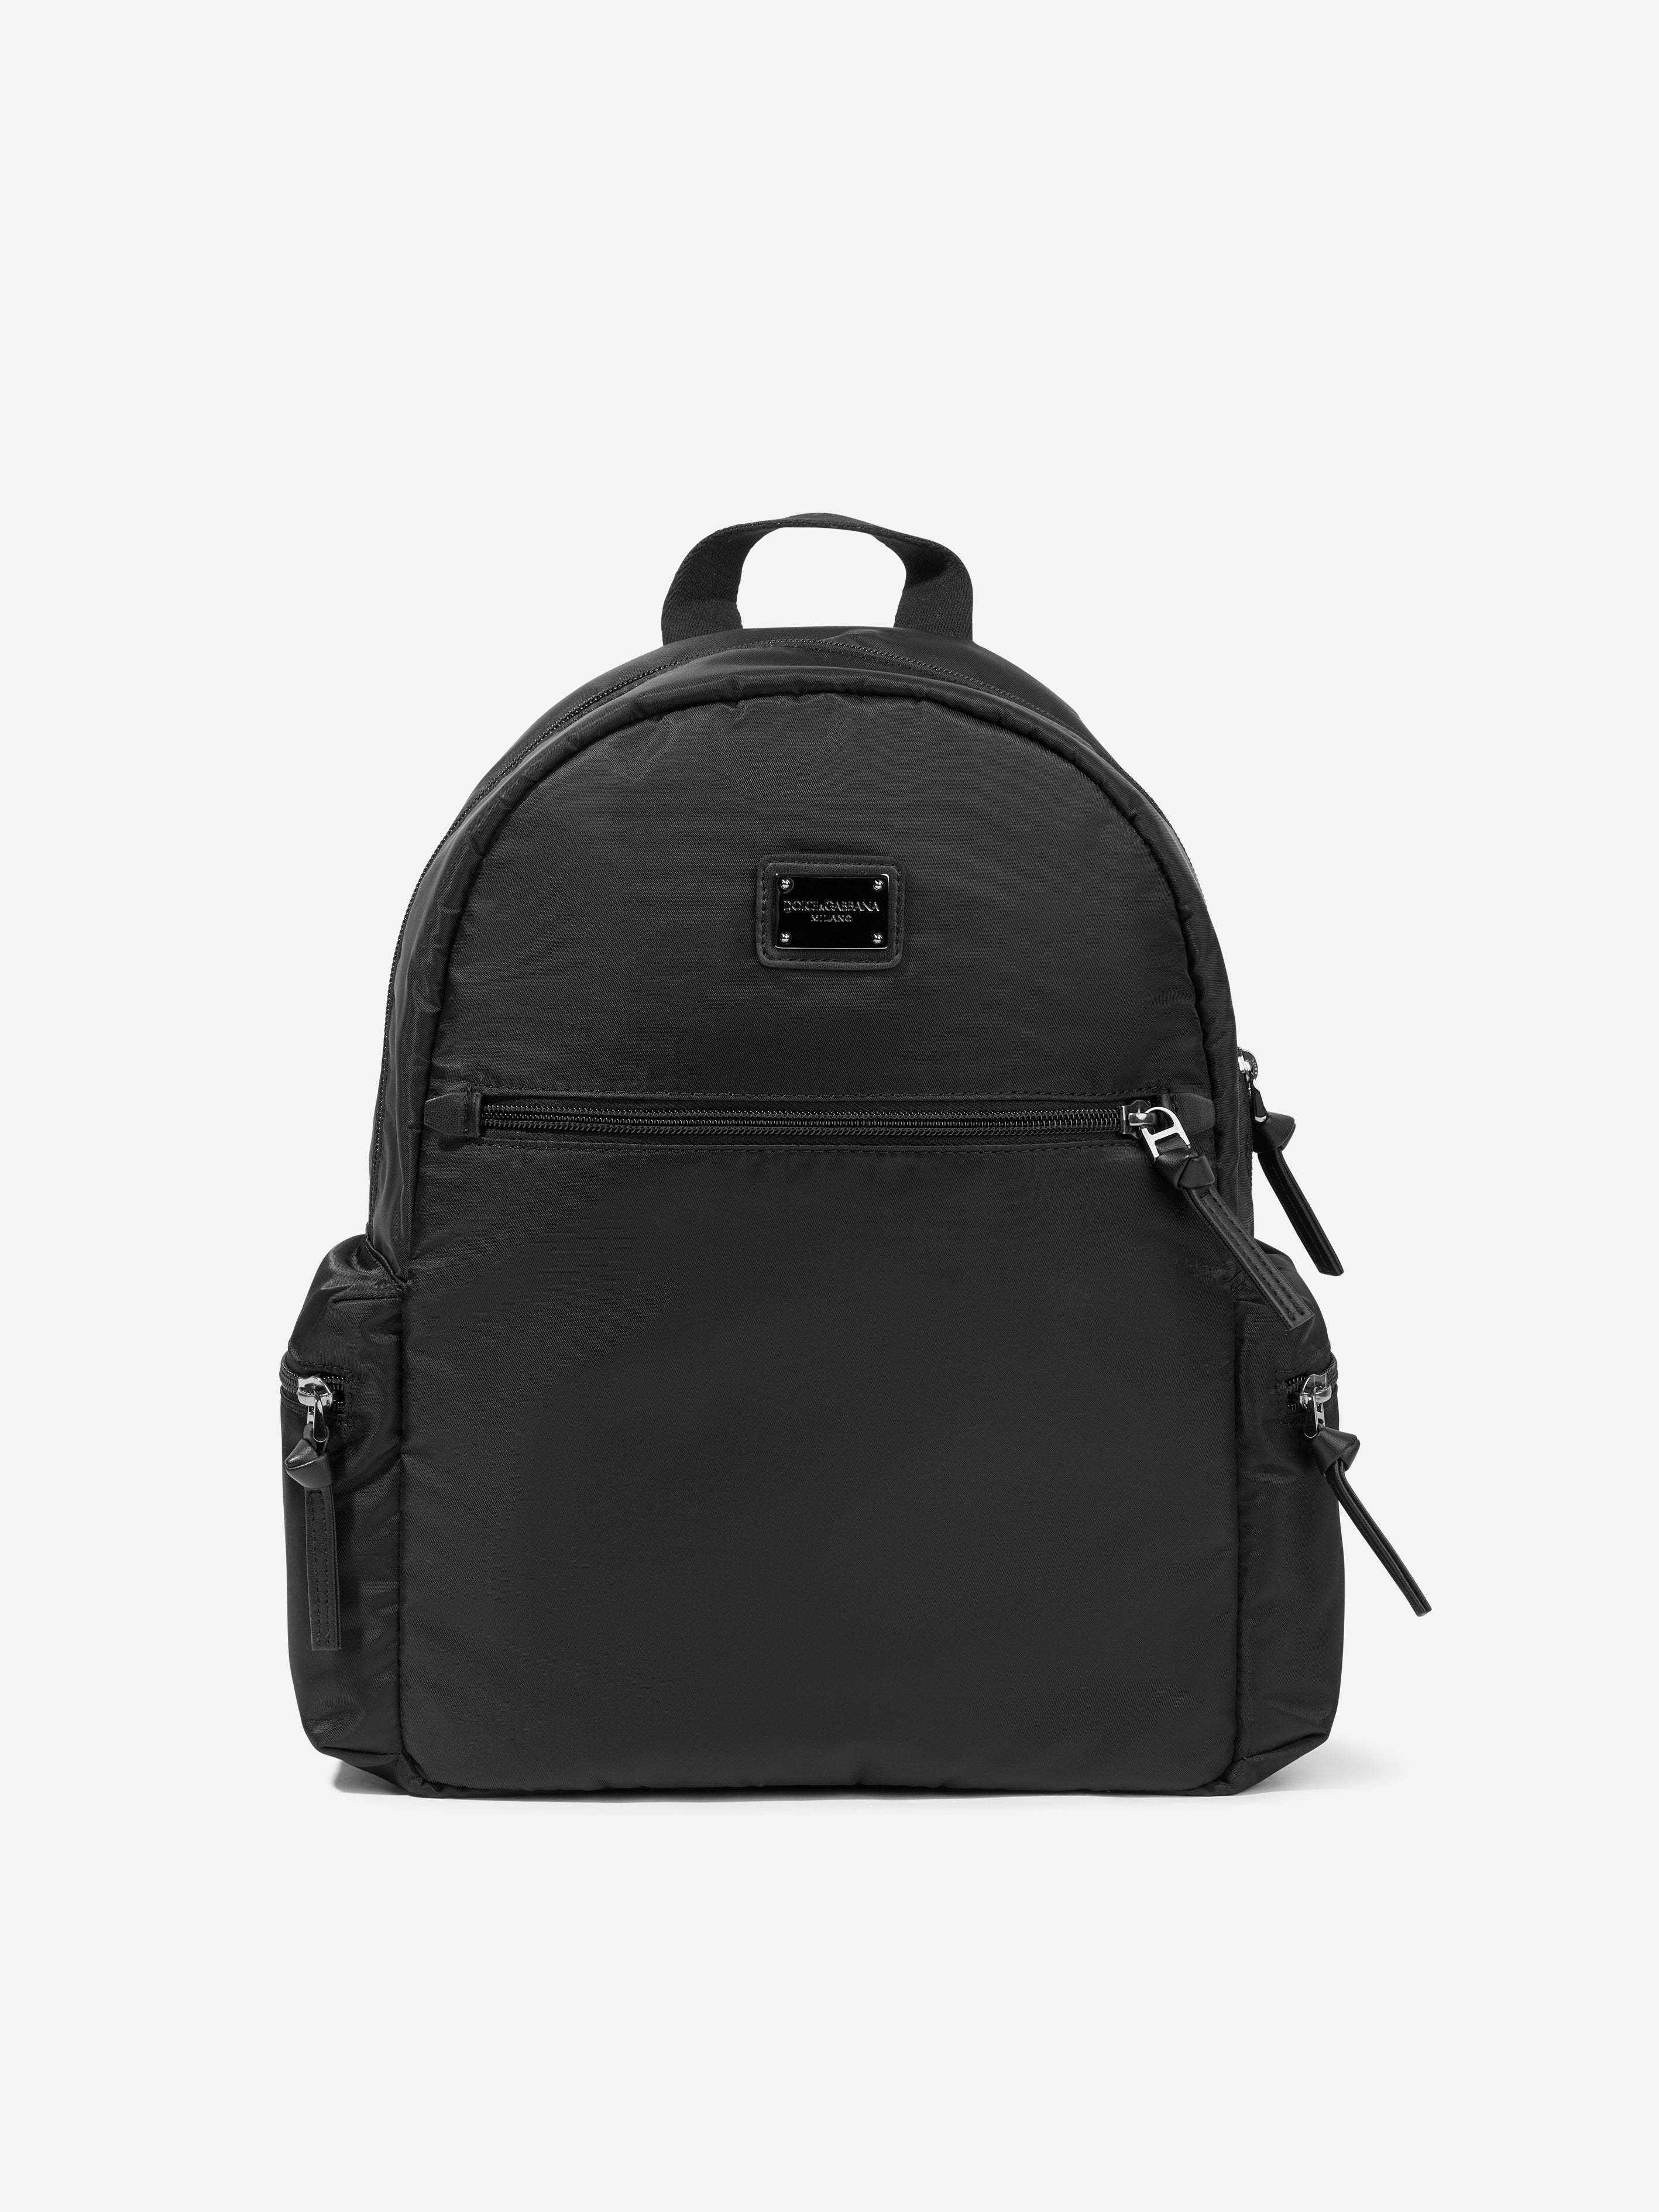 Dolce & Gabbana Branded Backpack